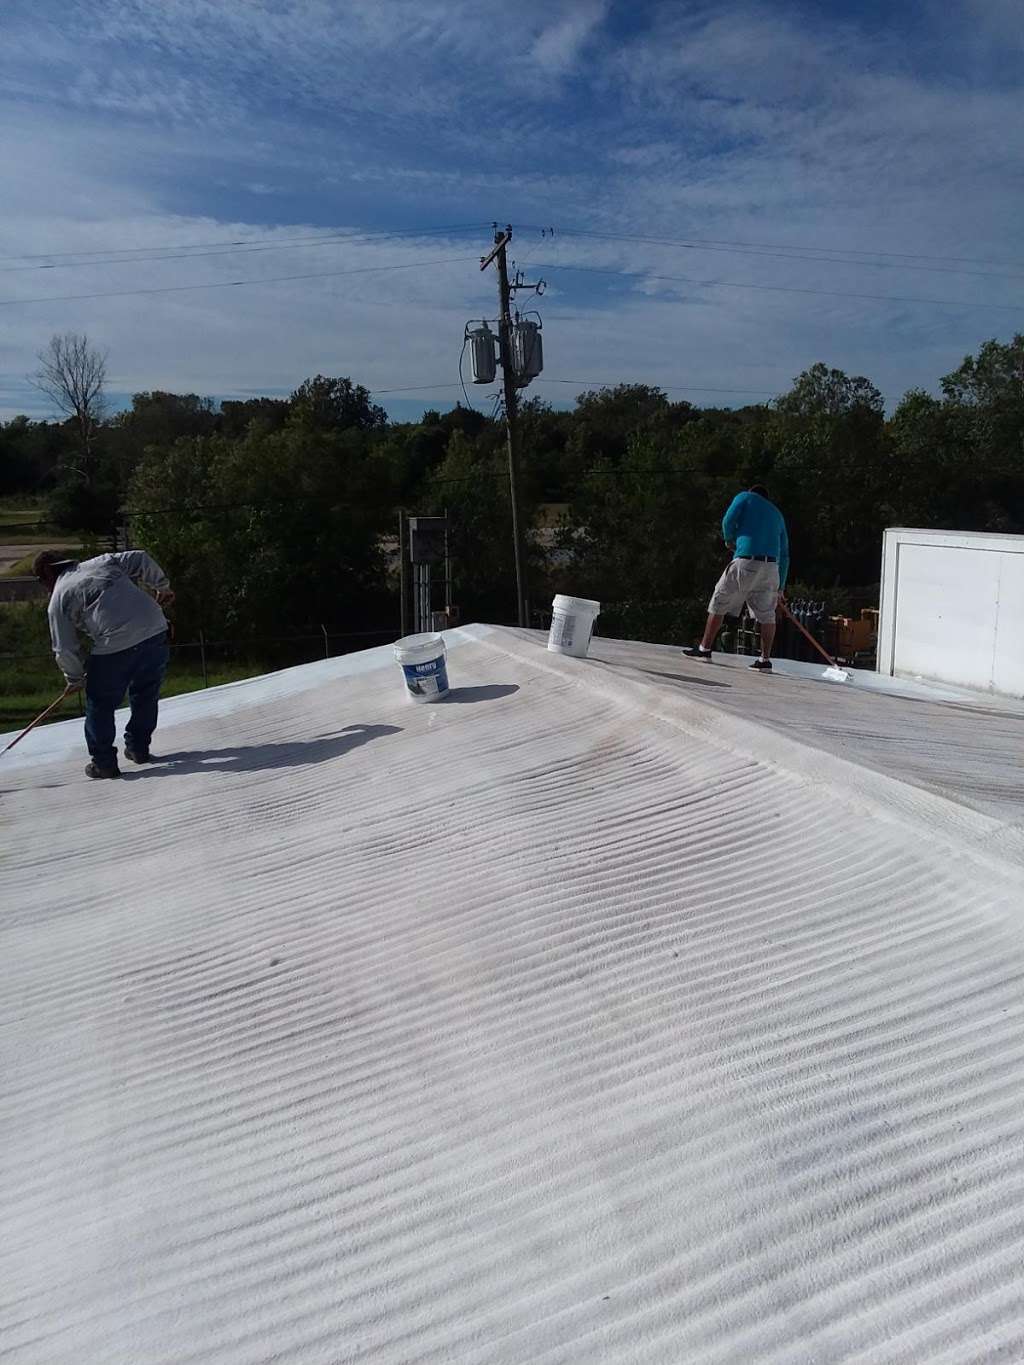 Industrial Roofing and Repair | 4411 Treasure Trail, Sugar Land, TX 77479, USA | Phone: (713) 280-9604